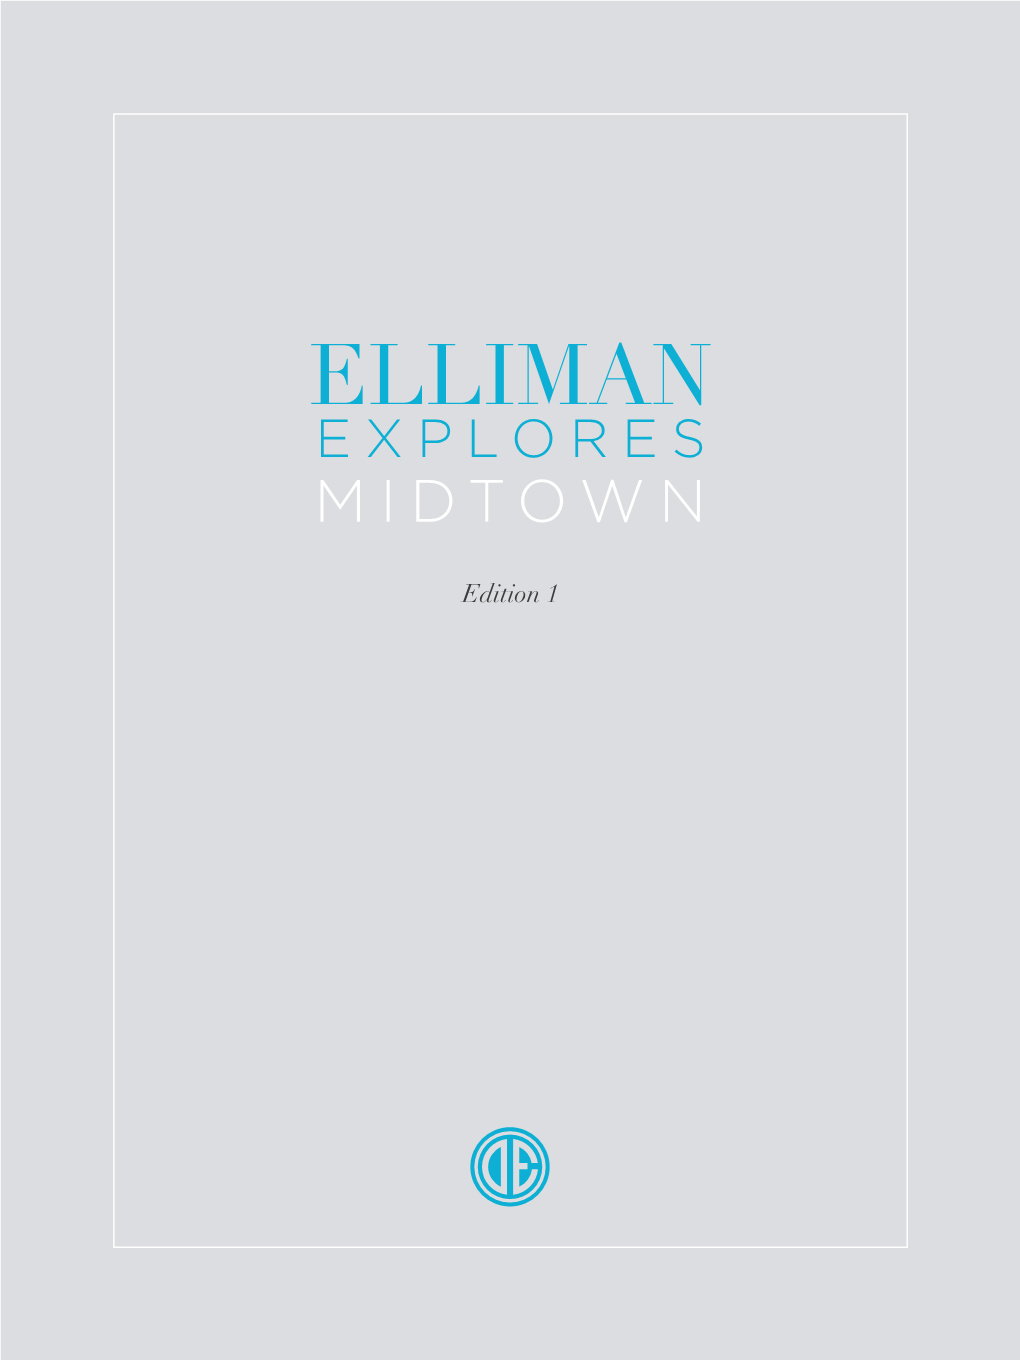 Elliman Explores Midtown